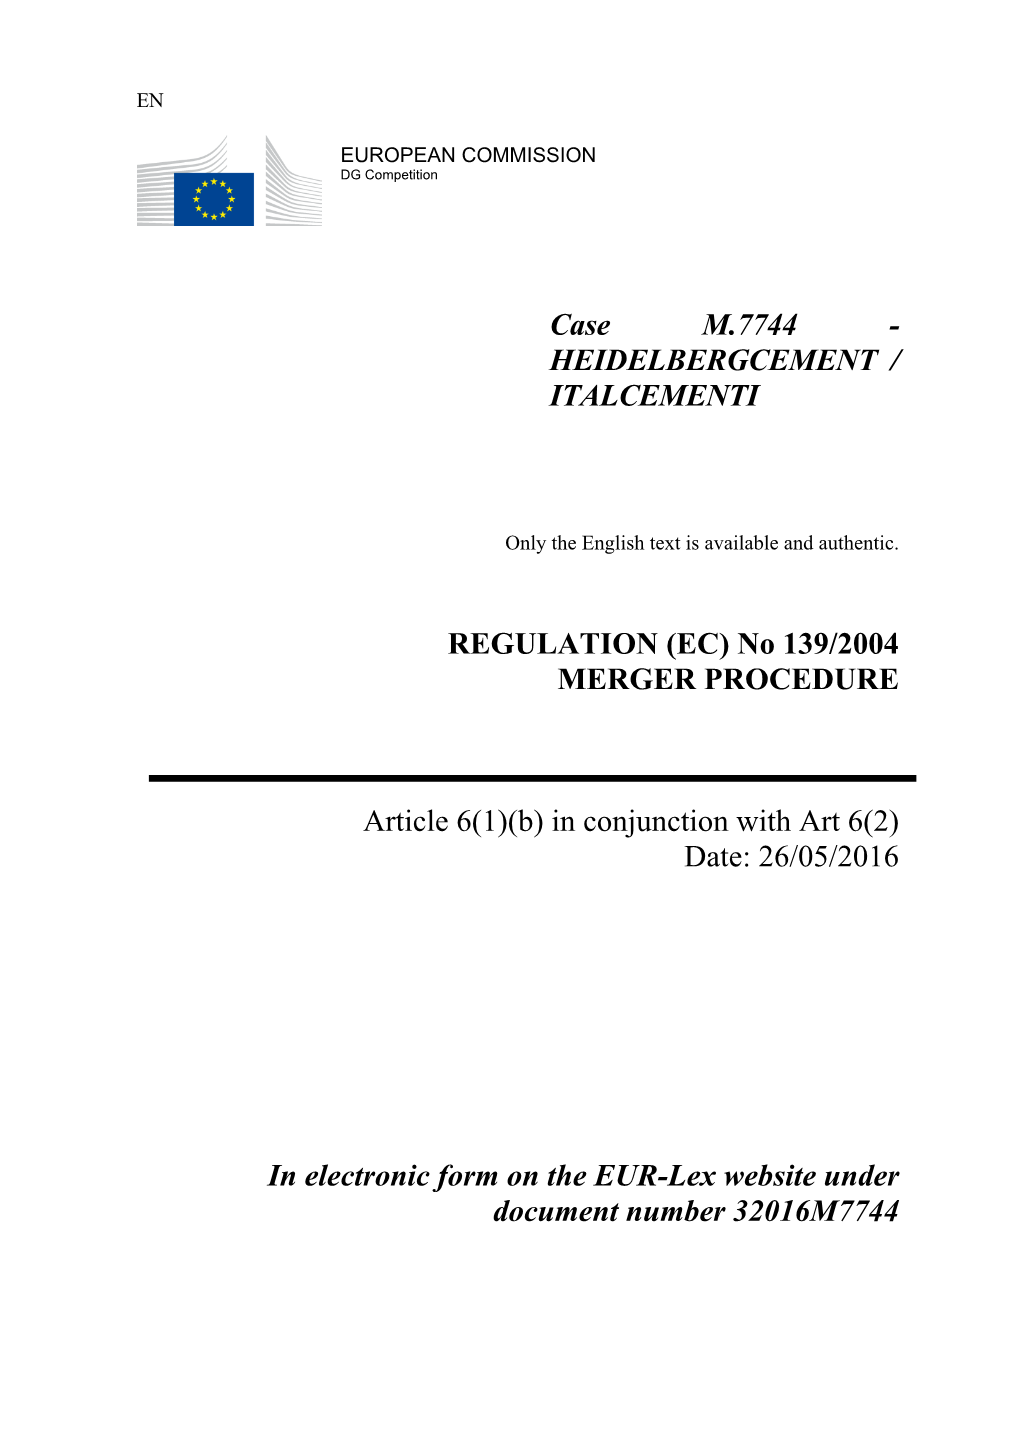 Case M.7744 - HEIDELBERGCEMENT / ITALCEMENTI